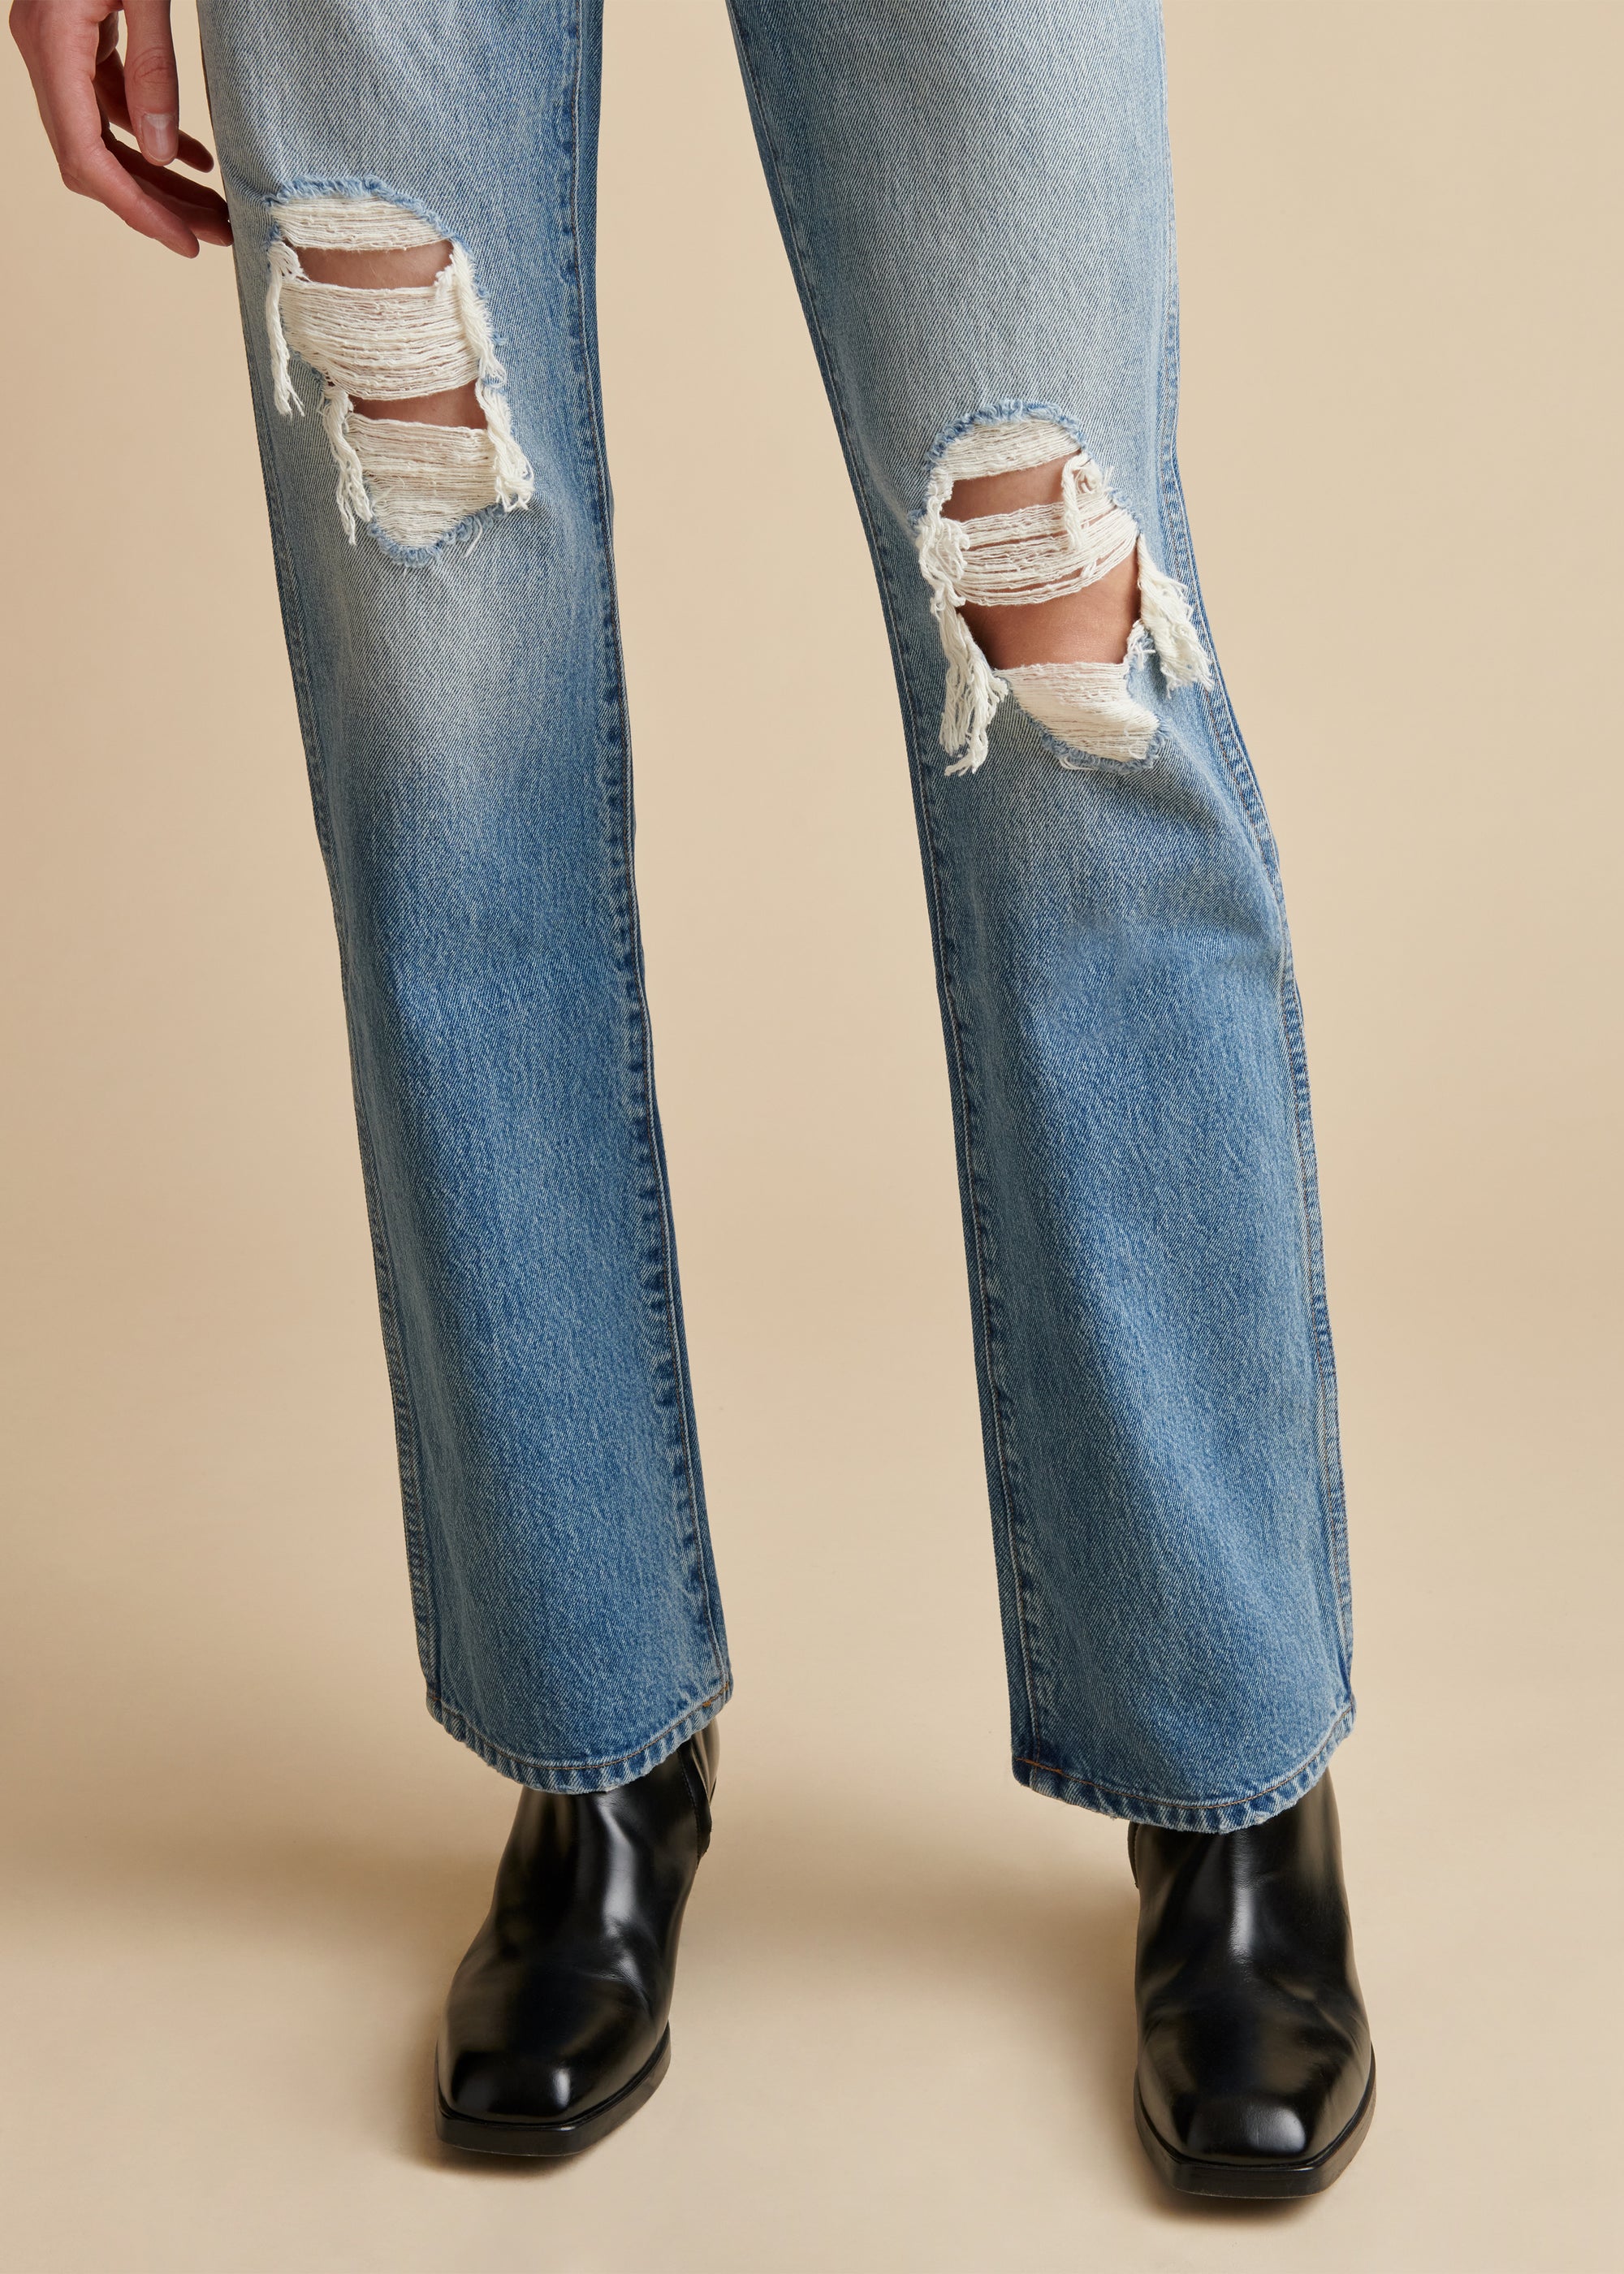 Danielle jeans - Portland